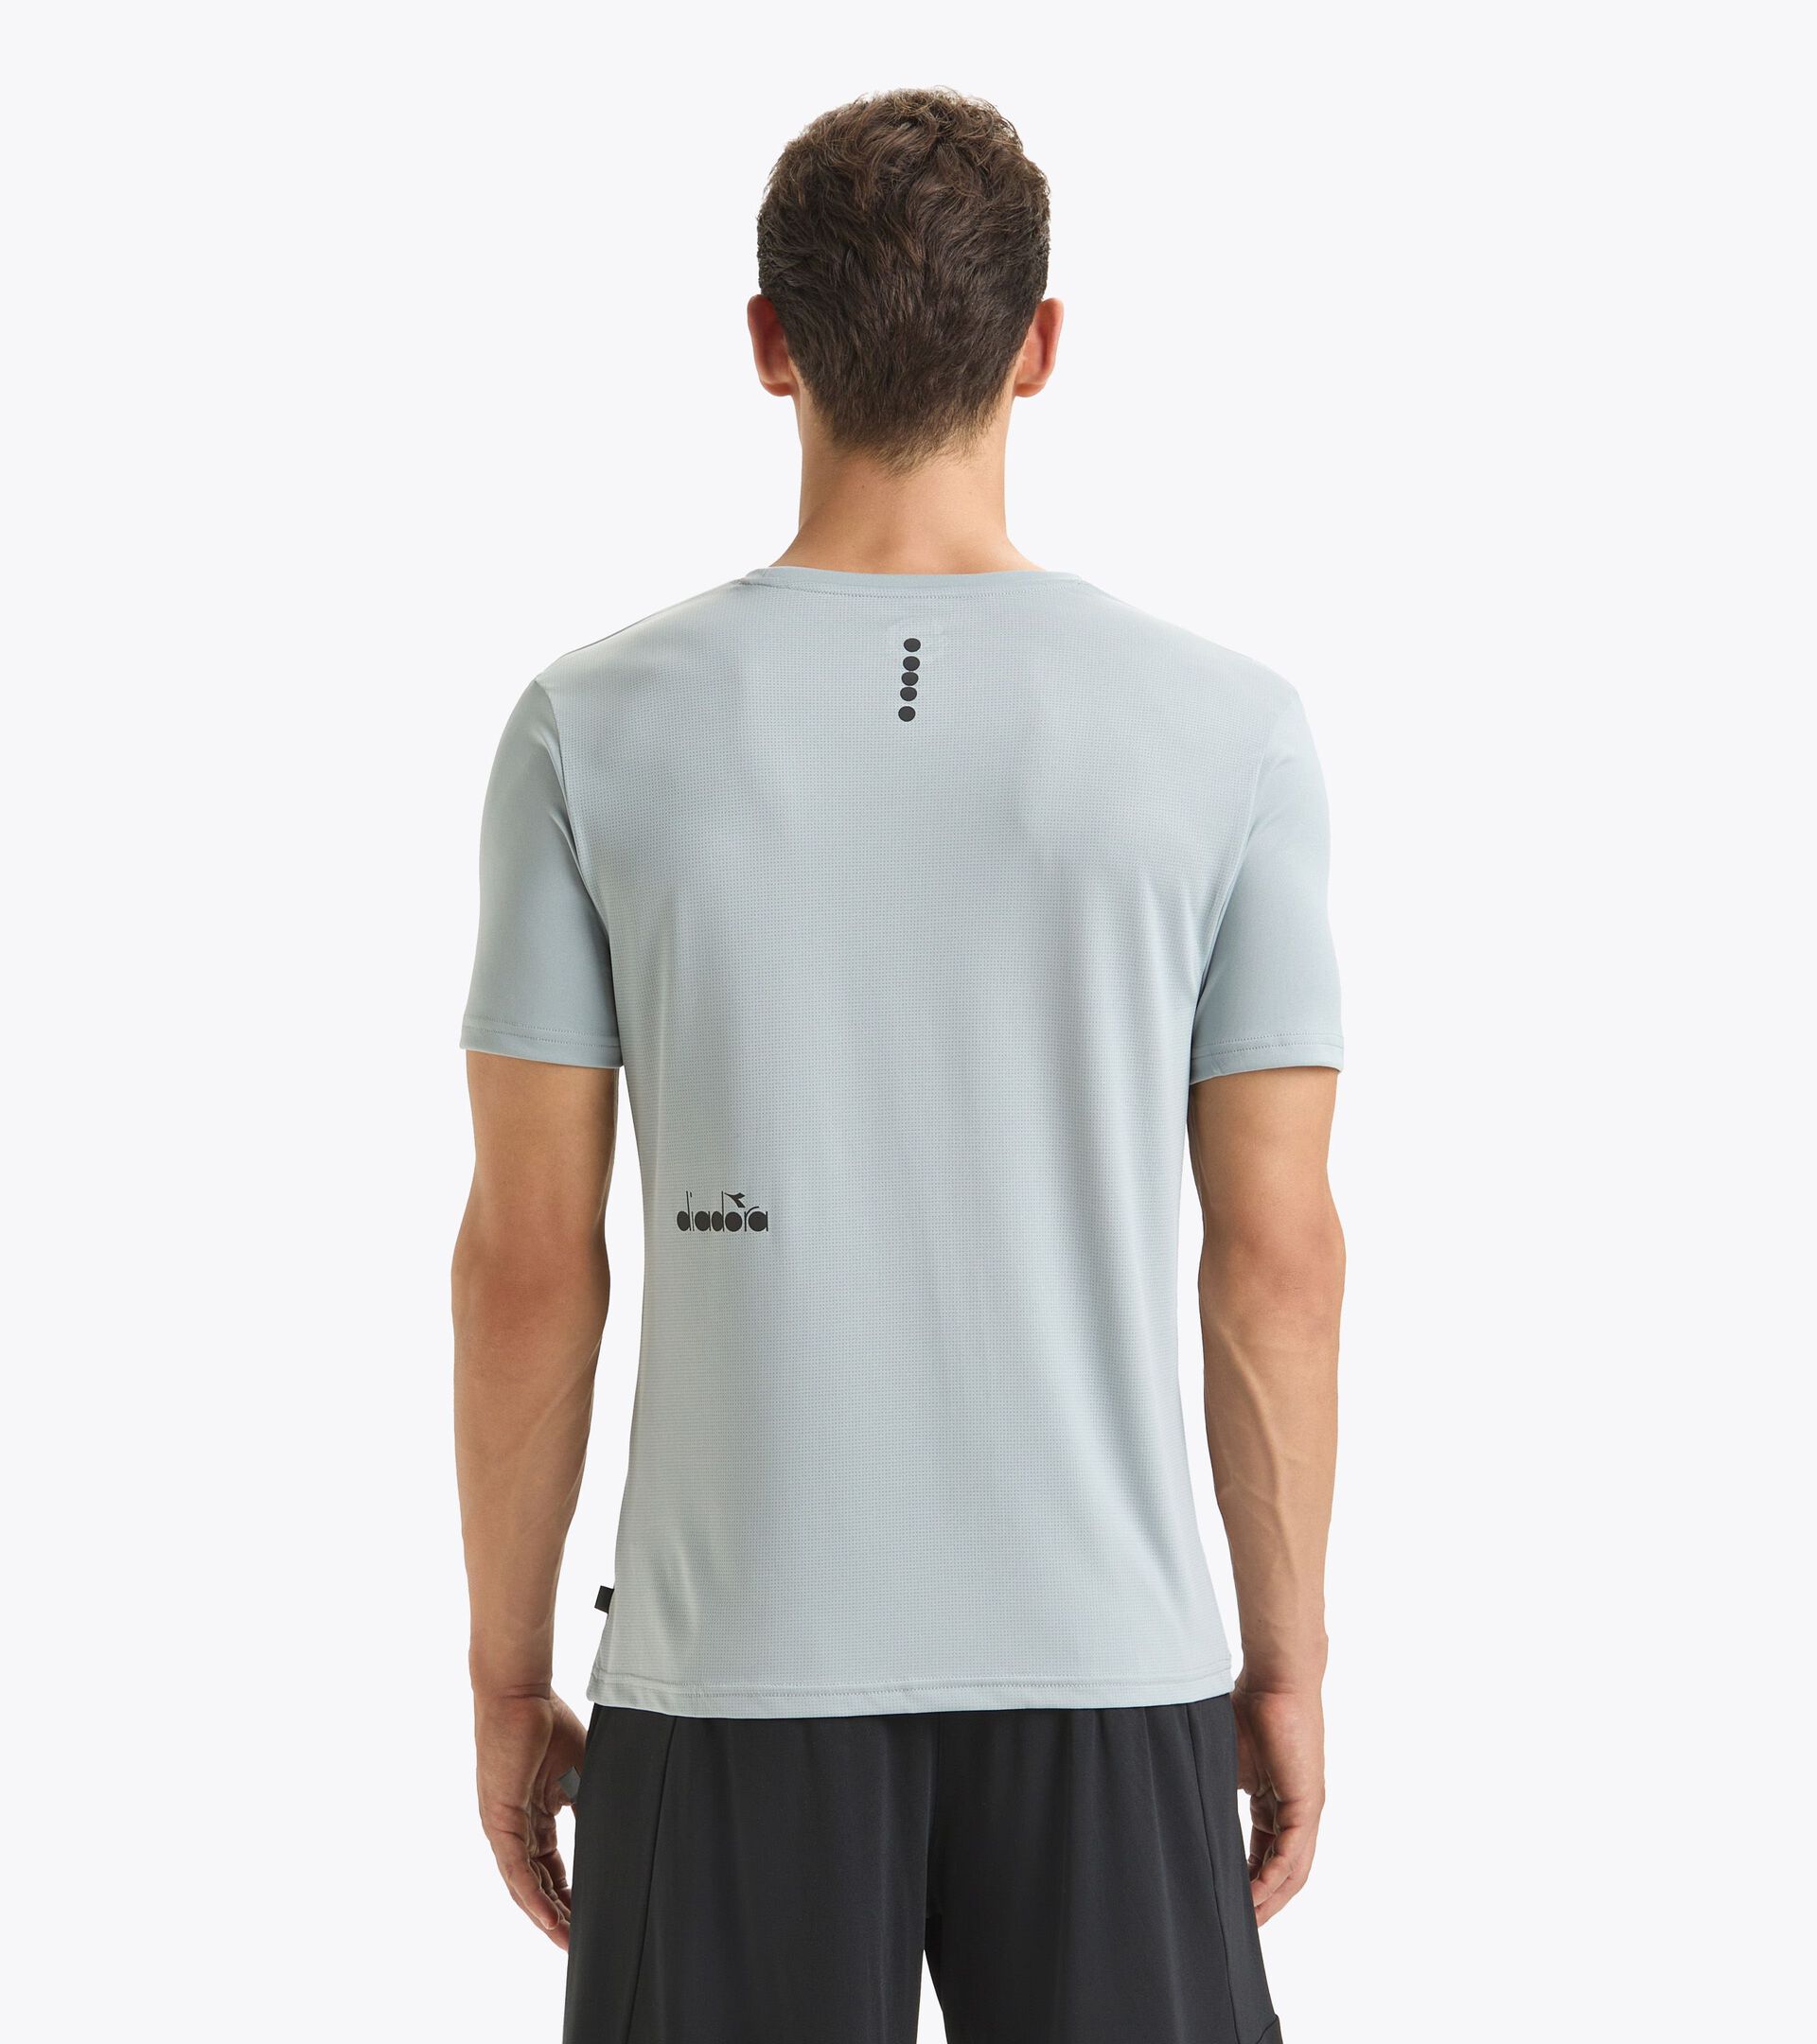 Camiseta deportiva - Hombre SS T-SHIRT RUN GRIS MEJOR - Diadora